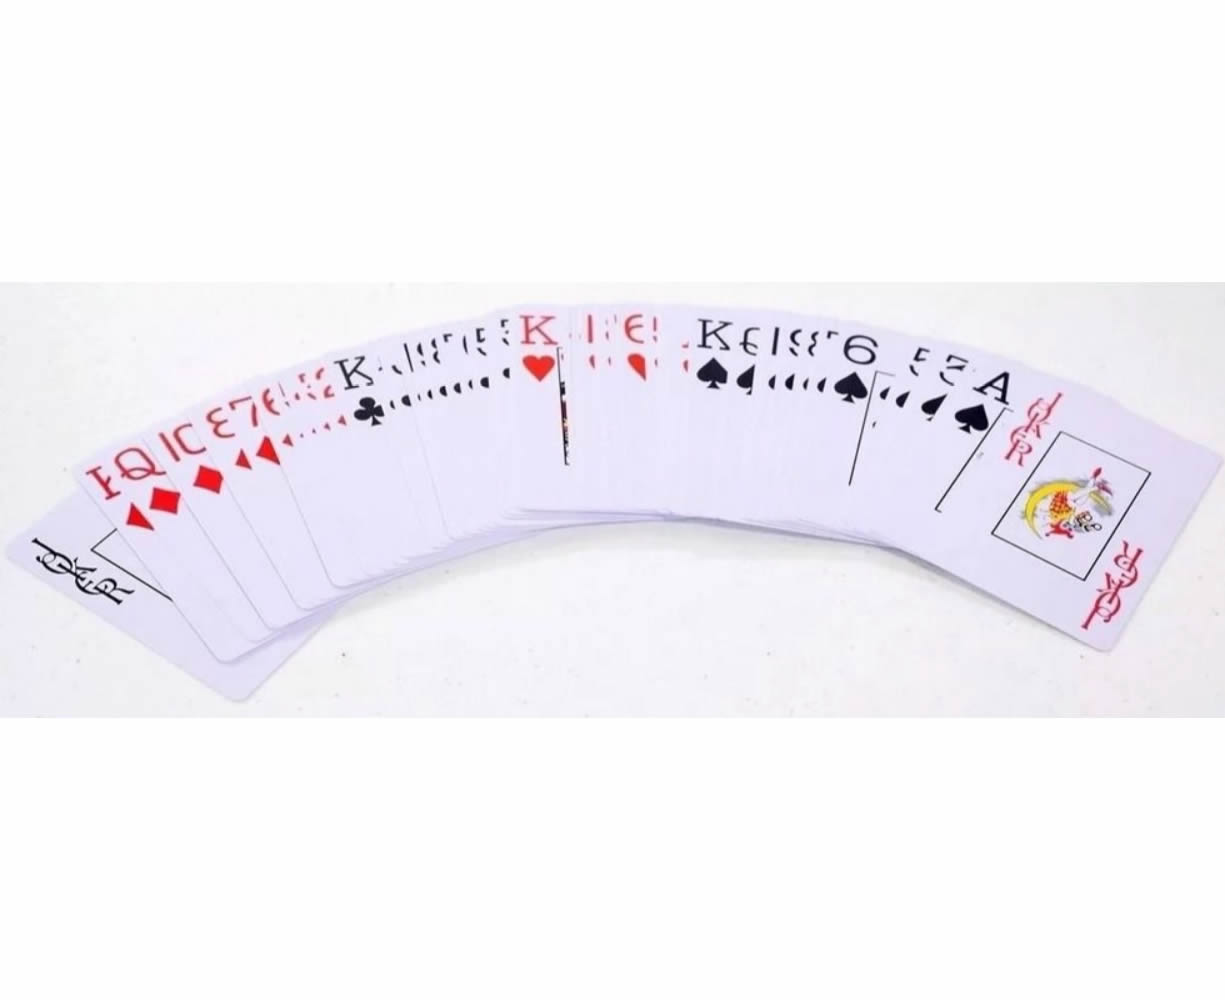 Kit 2 Baralhos Cartas de Truco/Poker - Blessed X2 Real SL  - Loja do Competidor